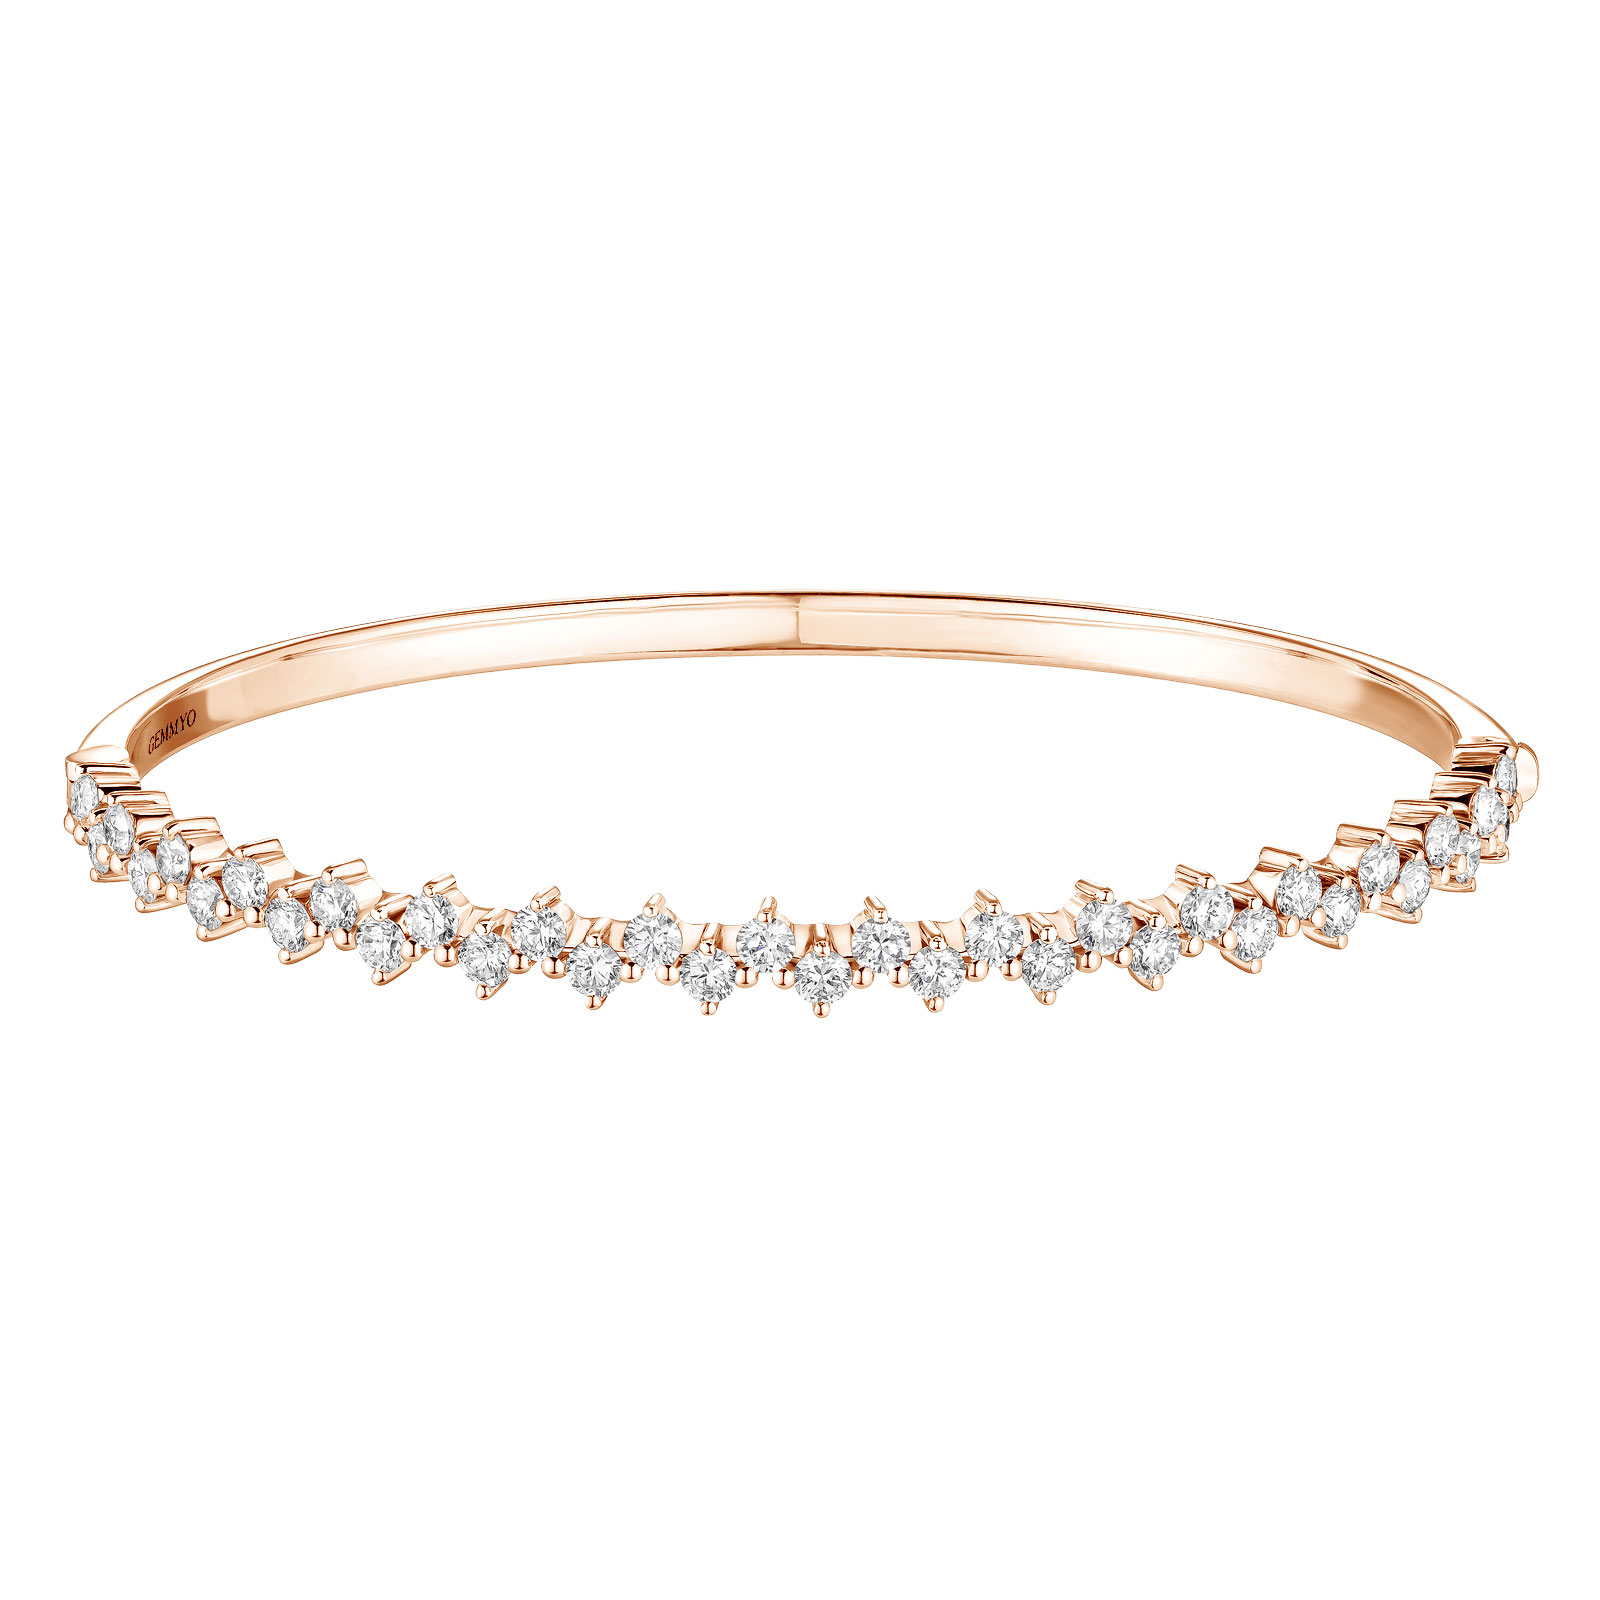 Bracelet Rose gold Diamond Paris 1901 M 1